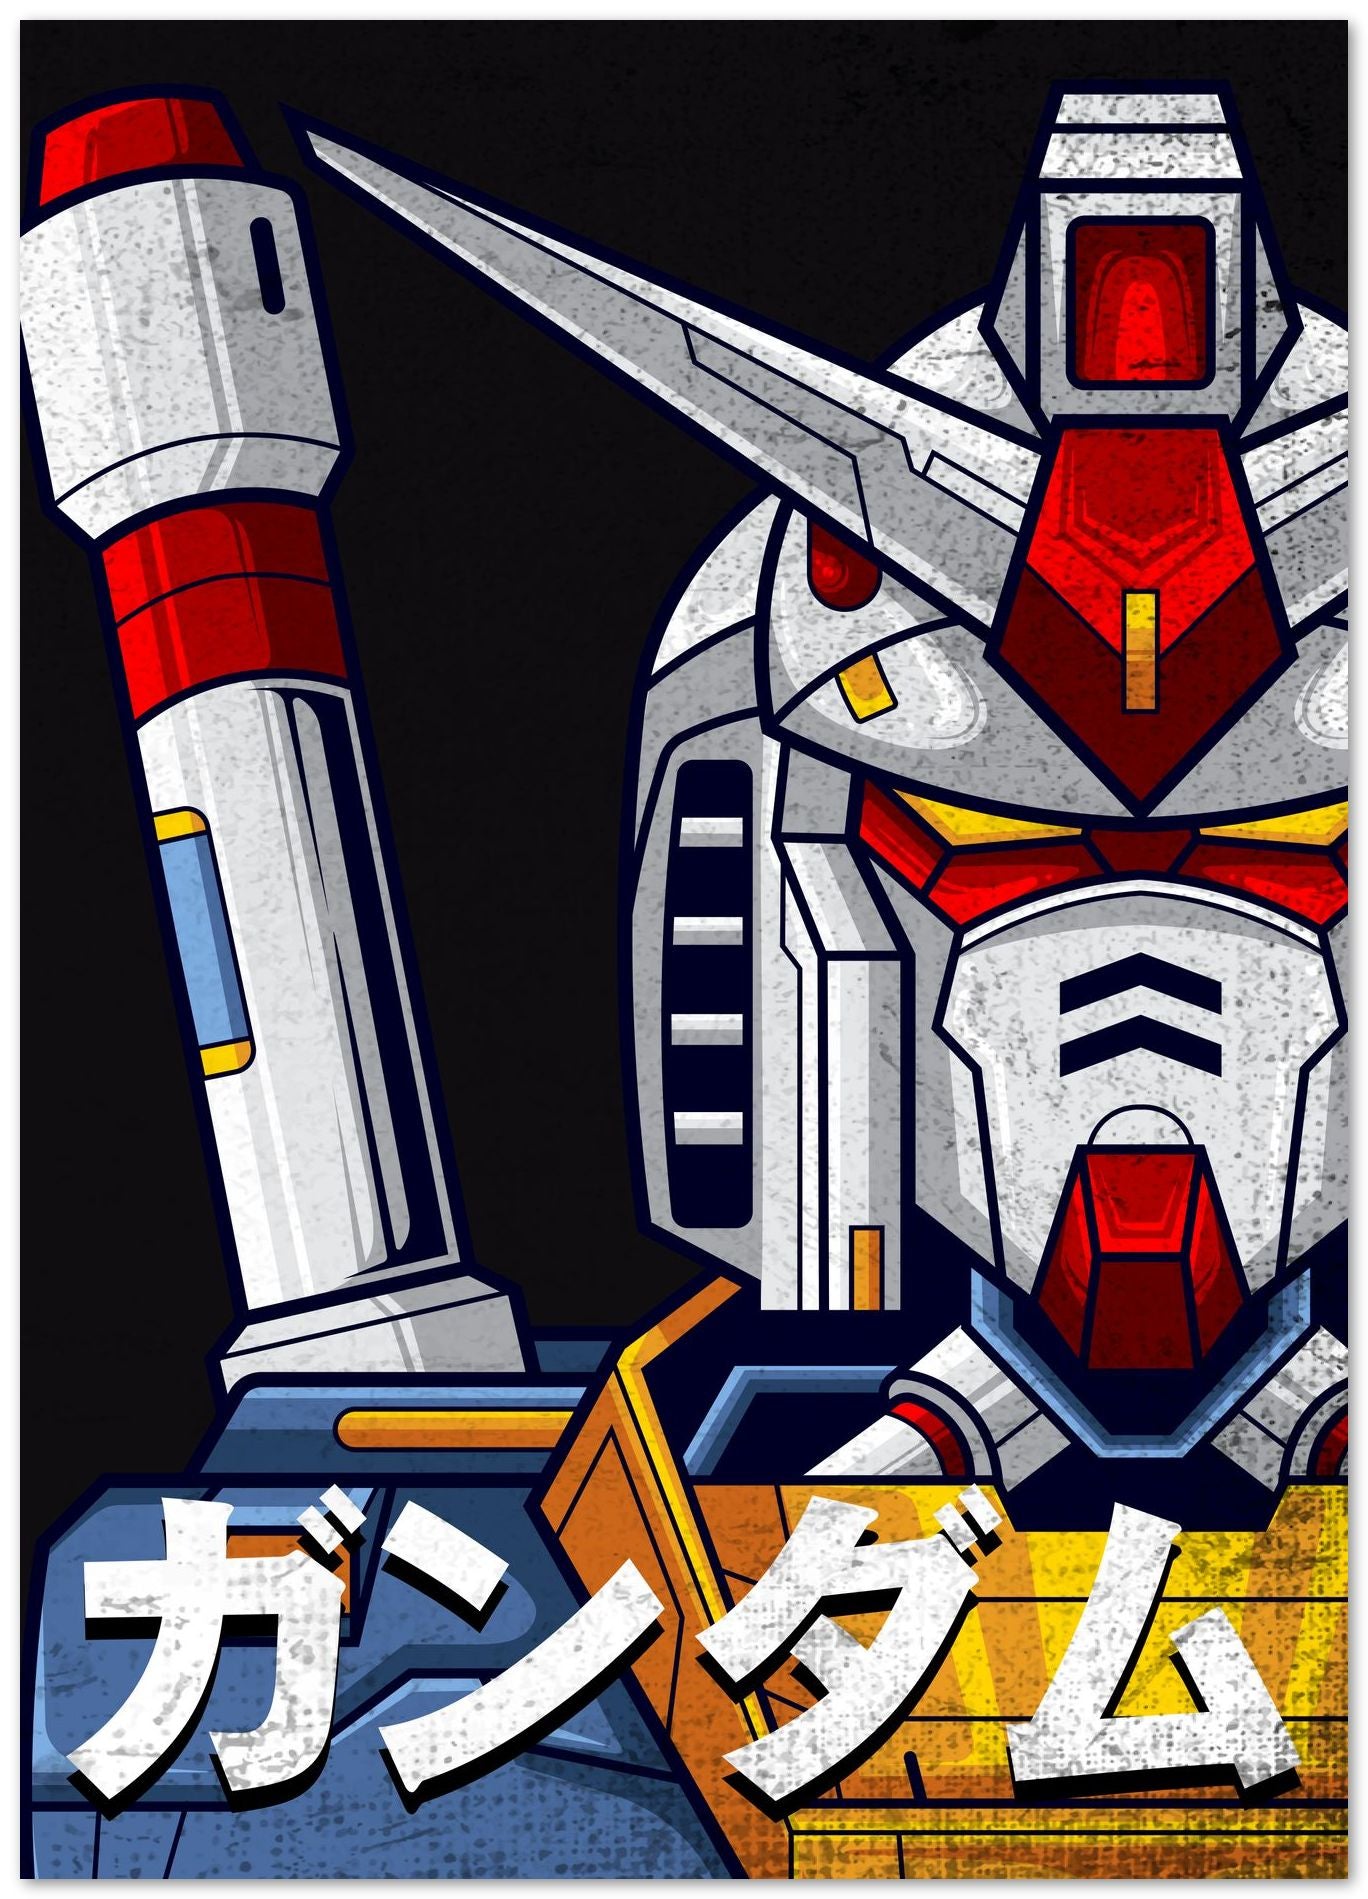 RX-78-2 Gundam Mecha Anime - @adamkhabibi